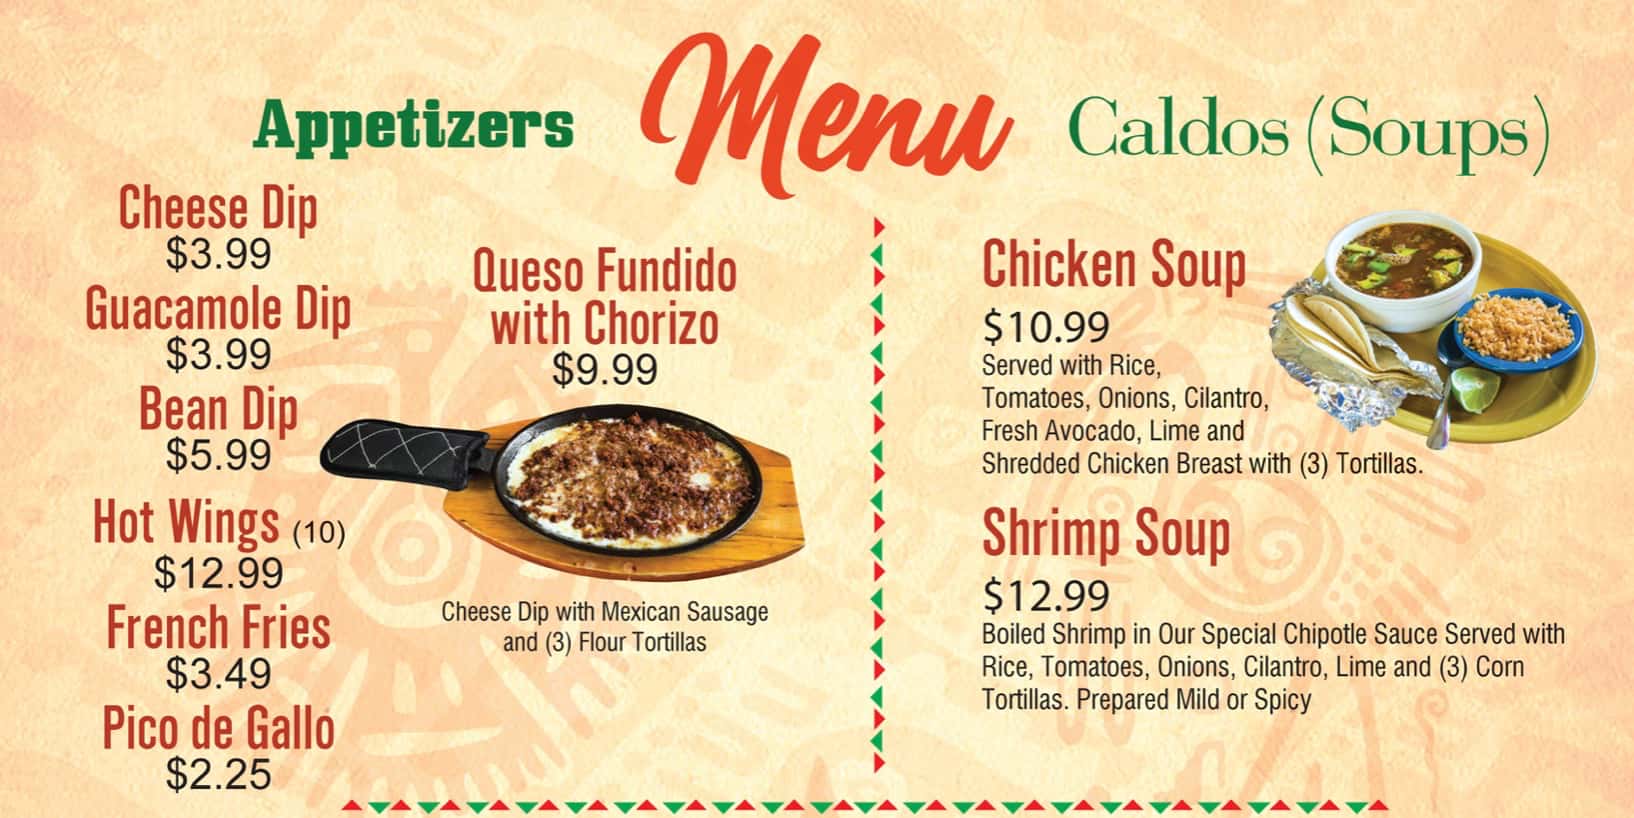 Casa Leon Mexican Restaurant Appetizers and Soups Menu